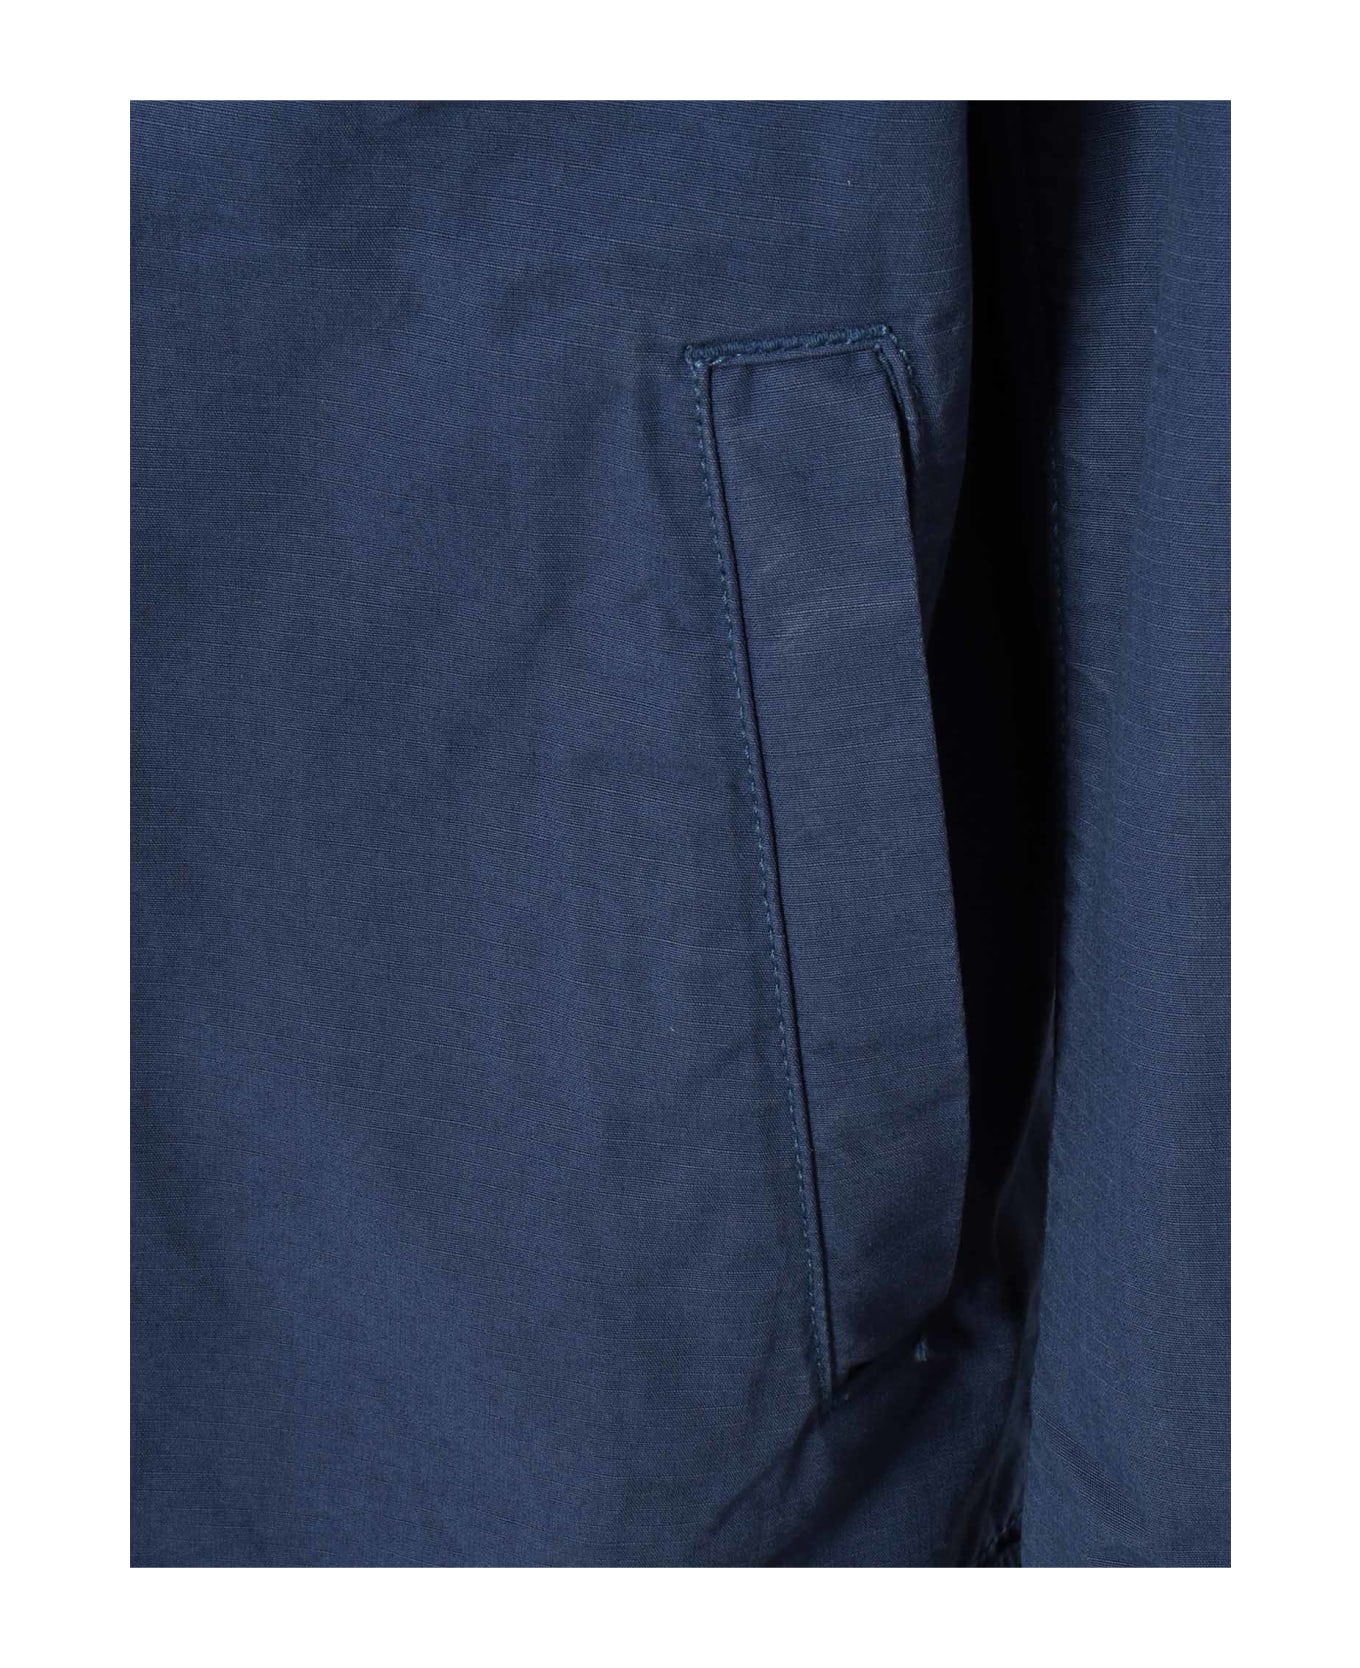 Barbour Casual Blue Jacket - BLUE